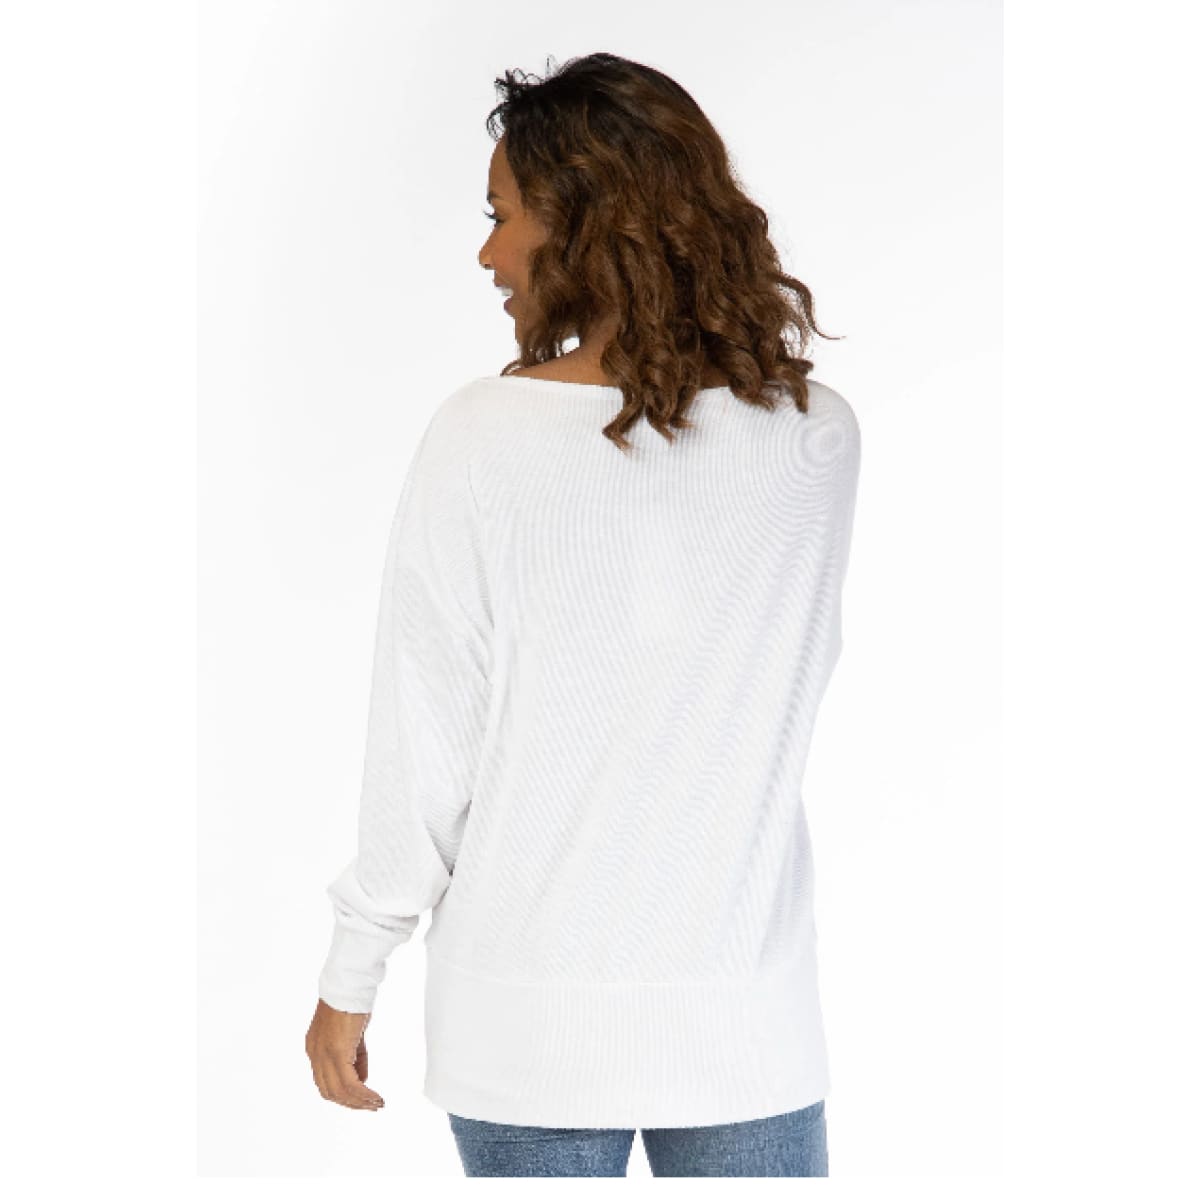 JMU Dukes Lainey Raglan top - IN STOCK - Long Sleeve Shirt